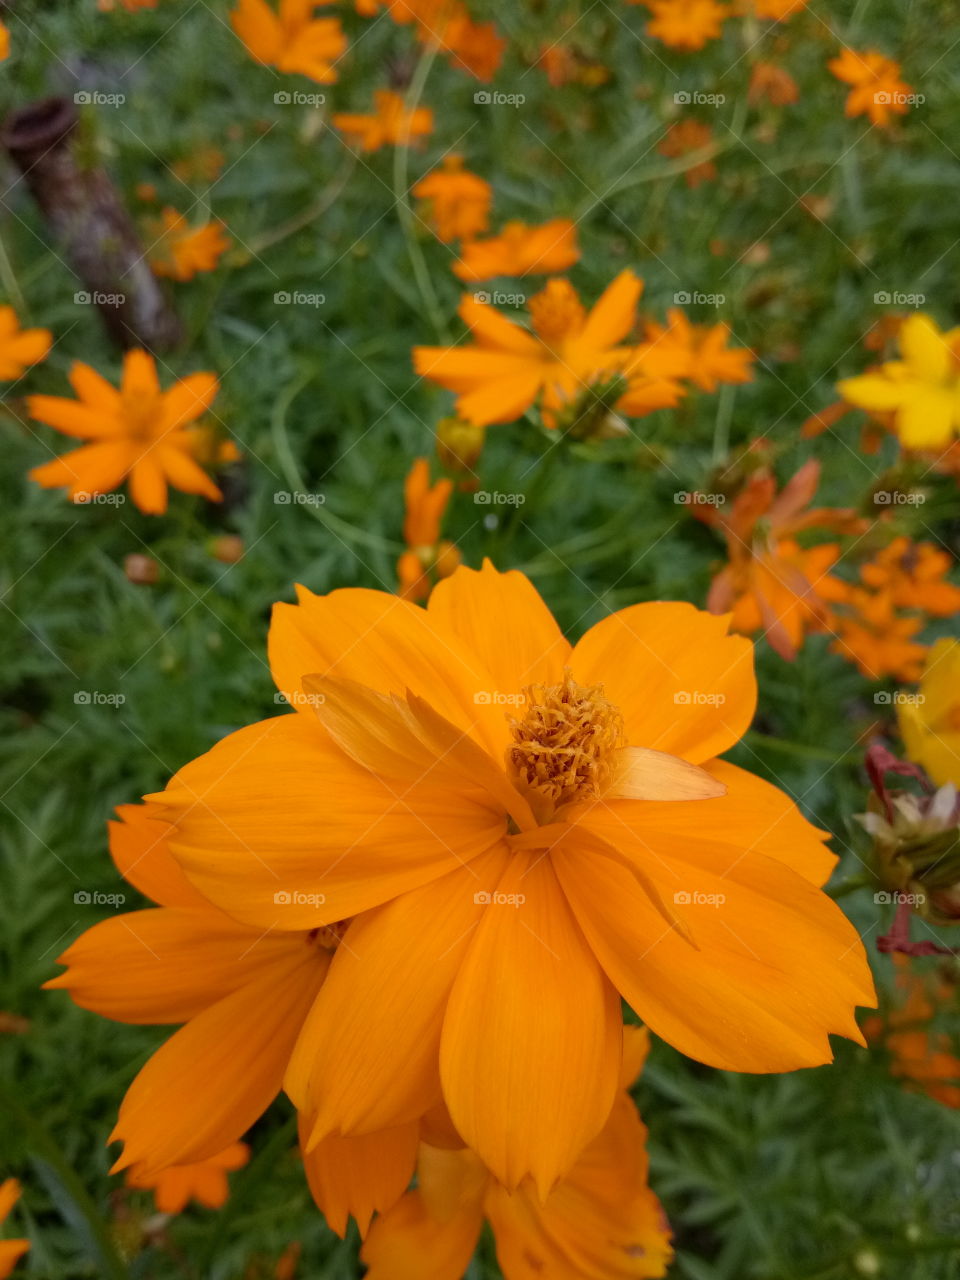 flower
yellow